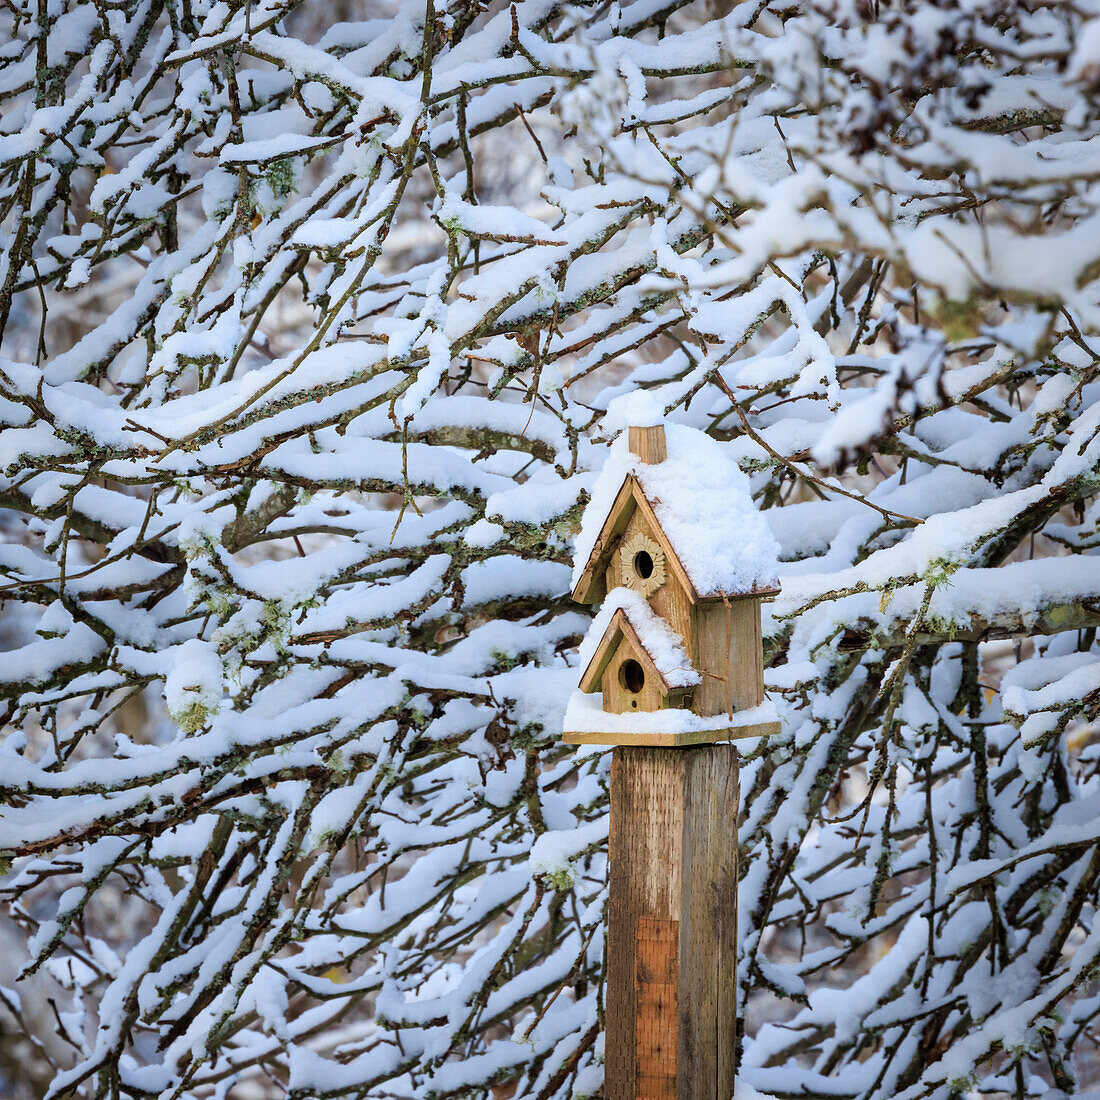 USA, Washington State, Seabeck. Snow-covered bird house and tree limbs.